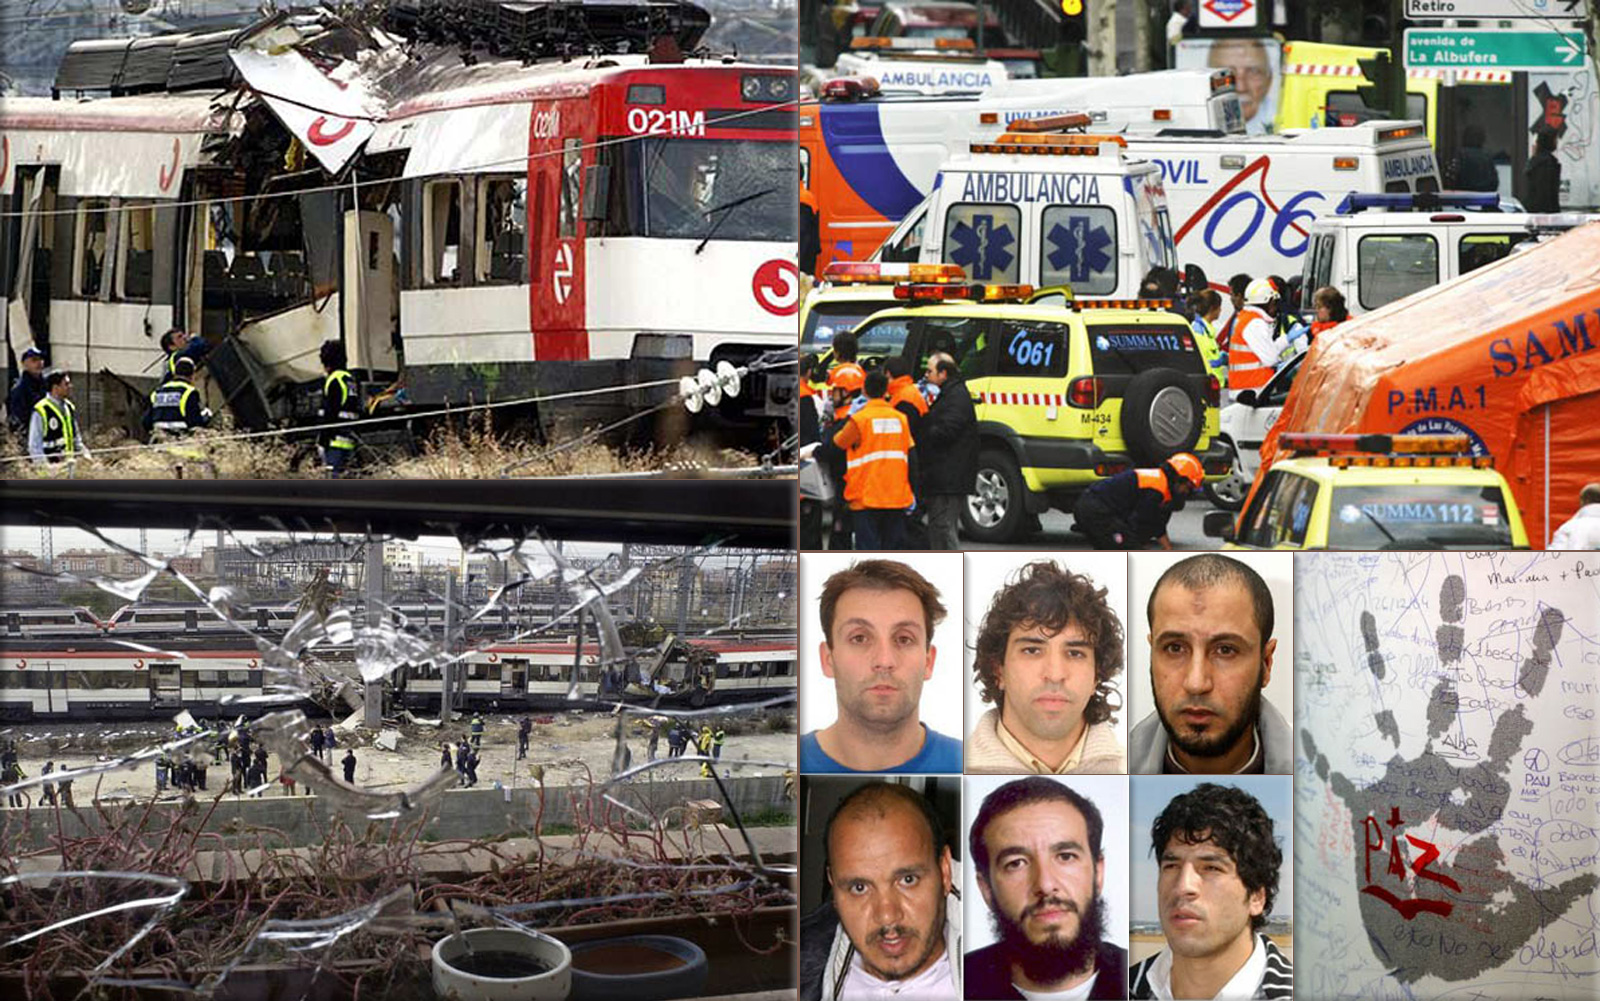 Madrid train bombings: Simultaneous explosions on rush hour trains in Madrid, Spain, kill 191 people